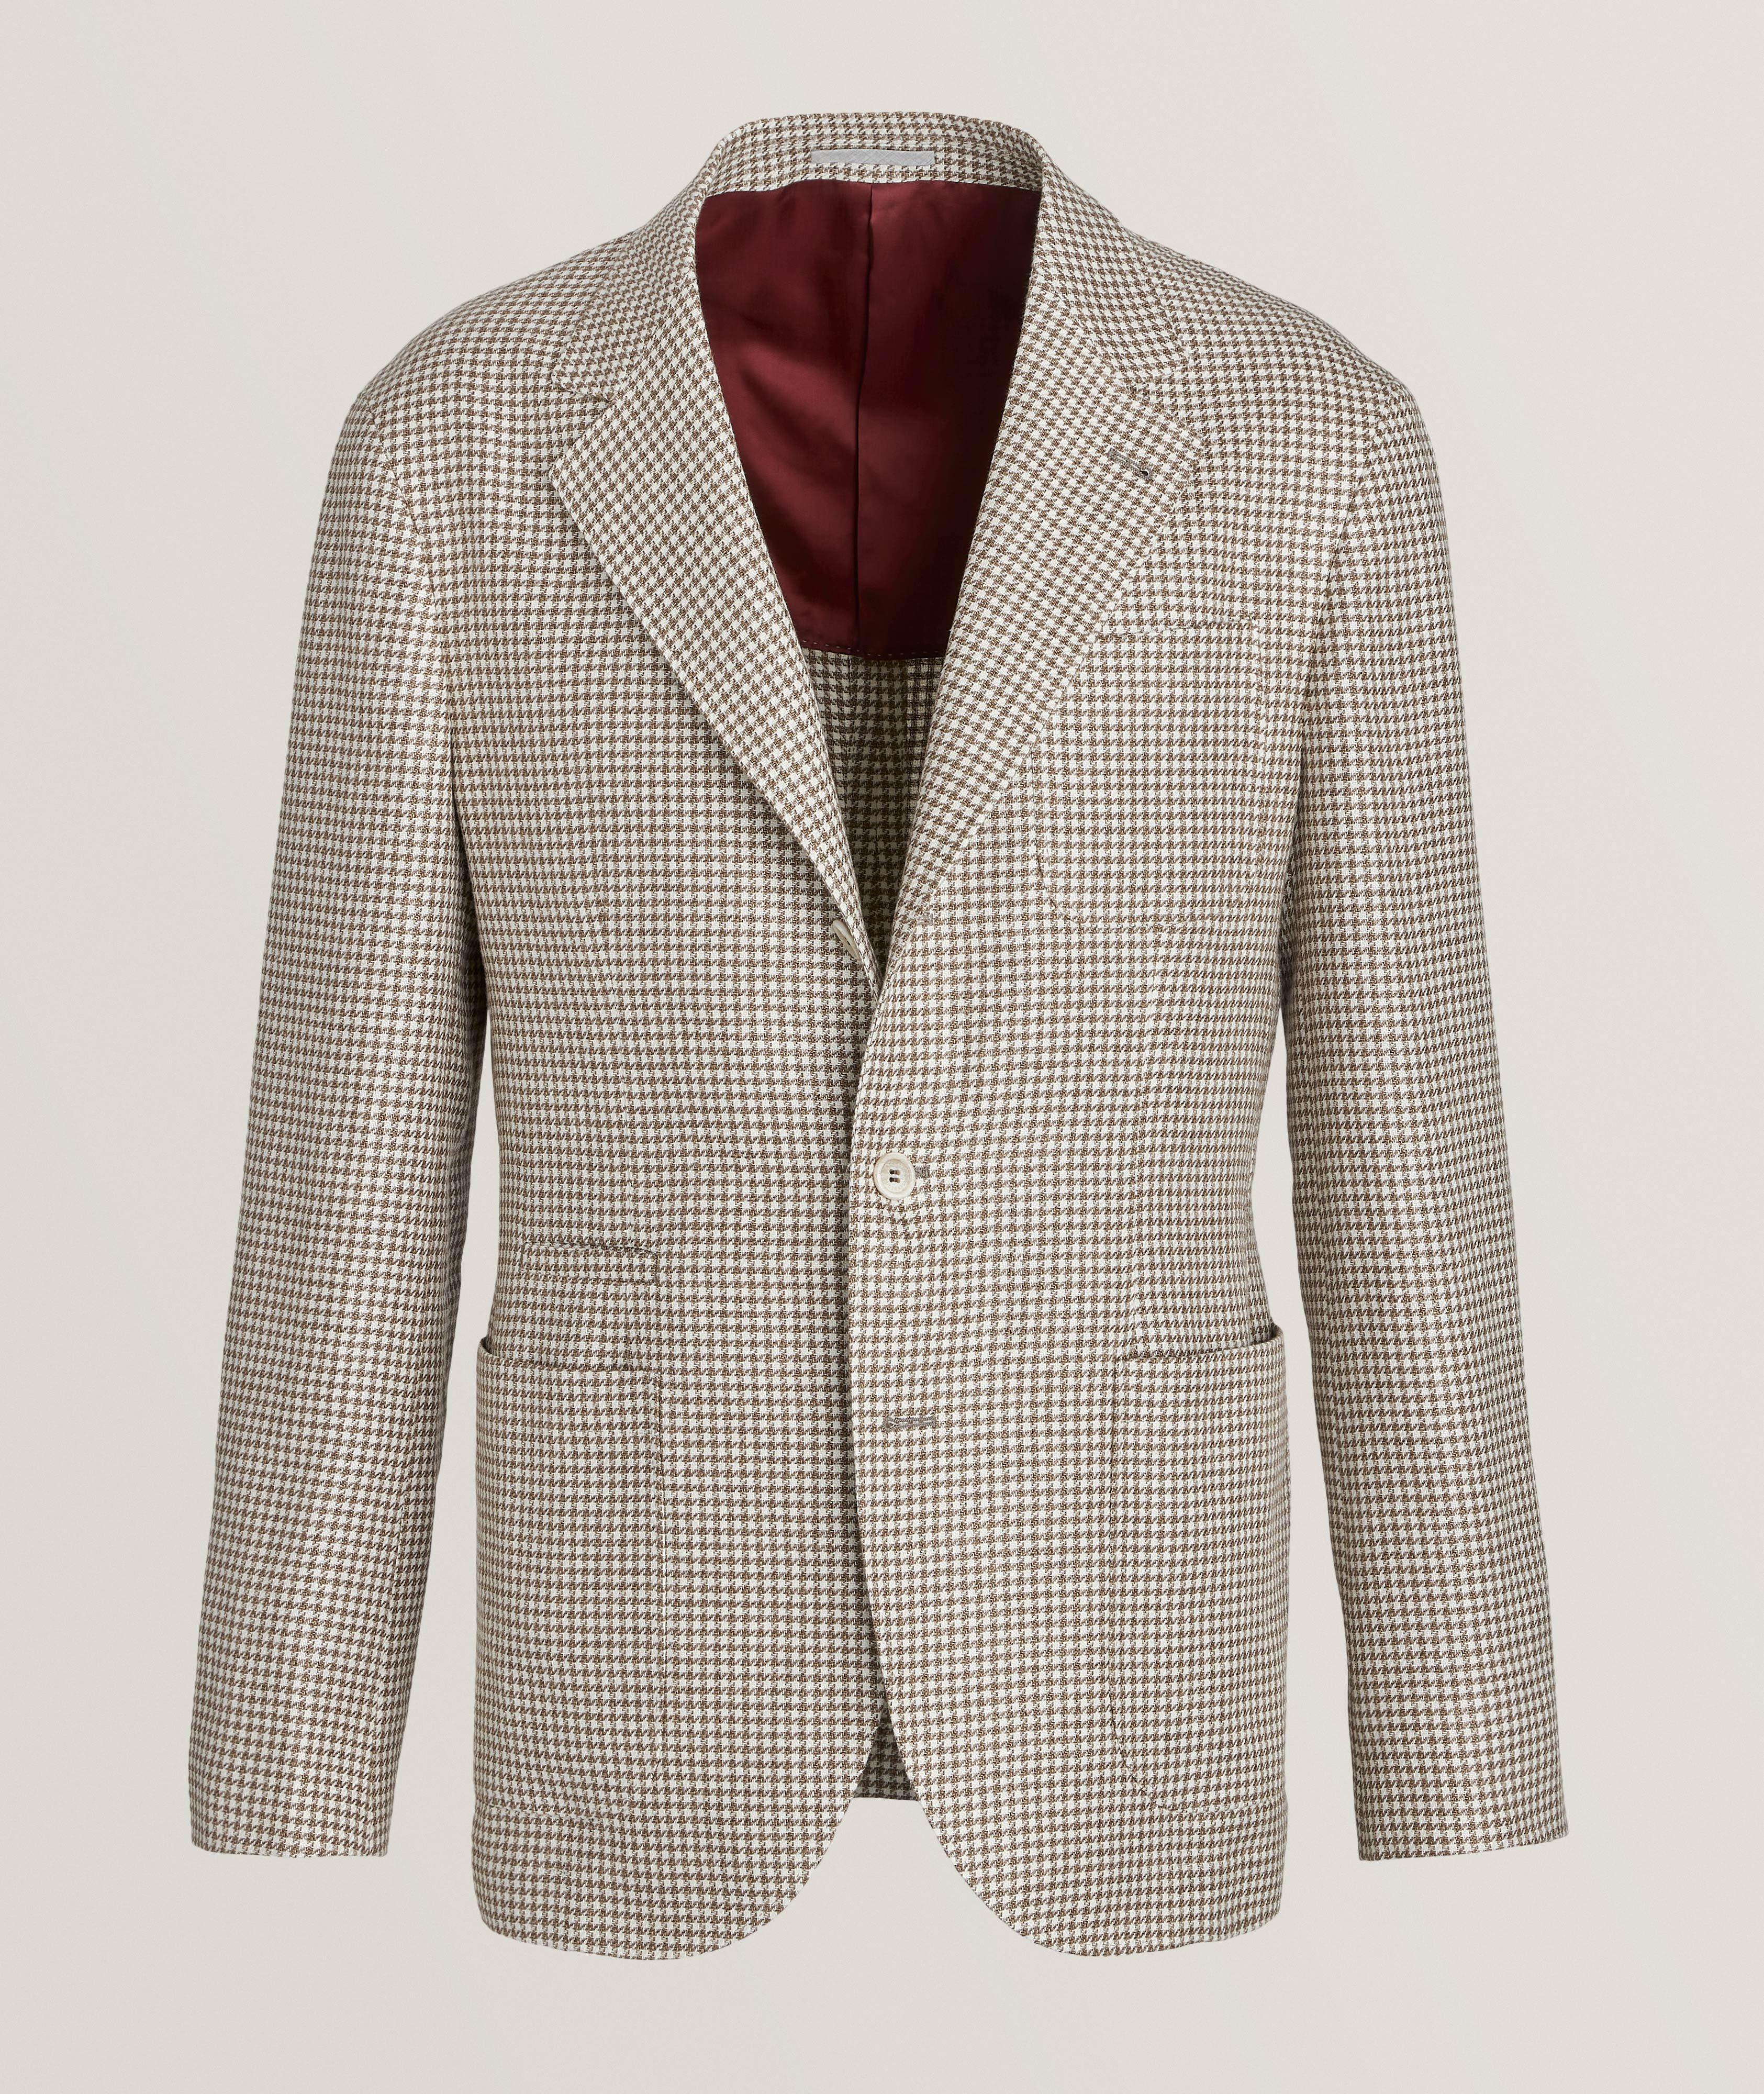 Houndstooth Linen, Wool & Silk Sport Jacket